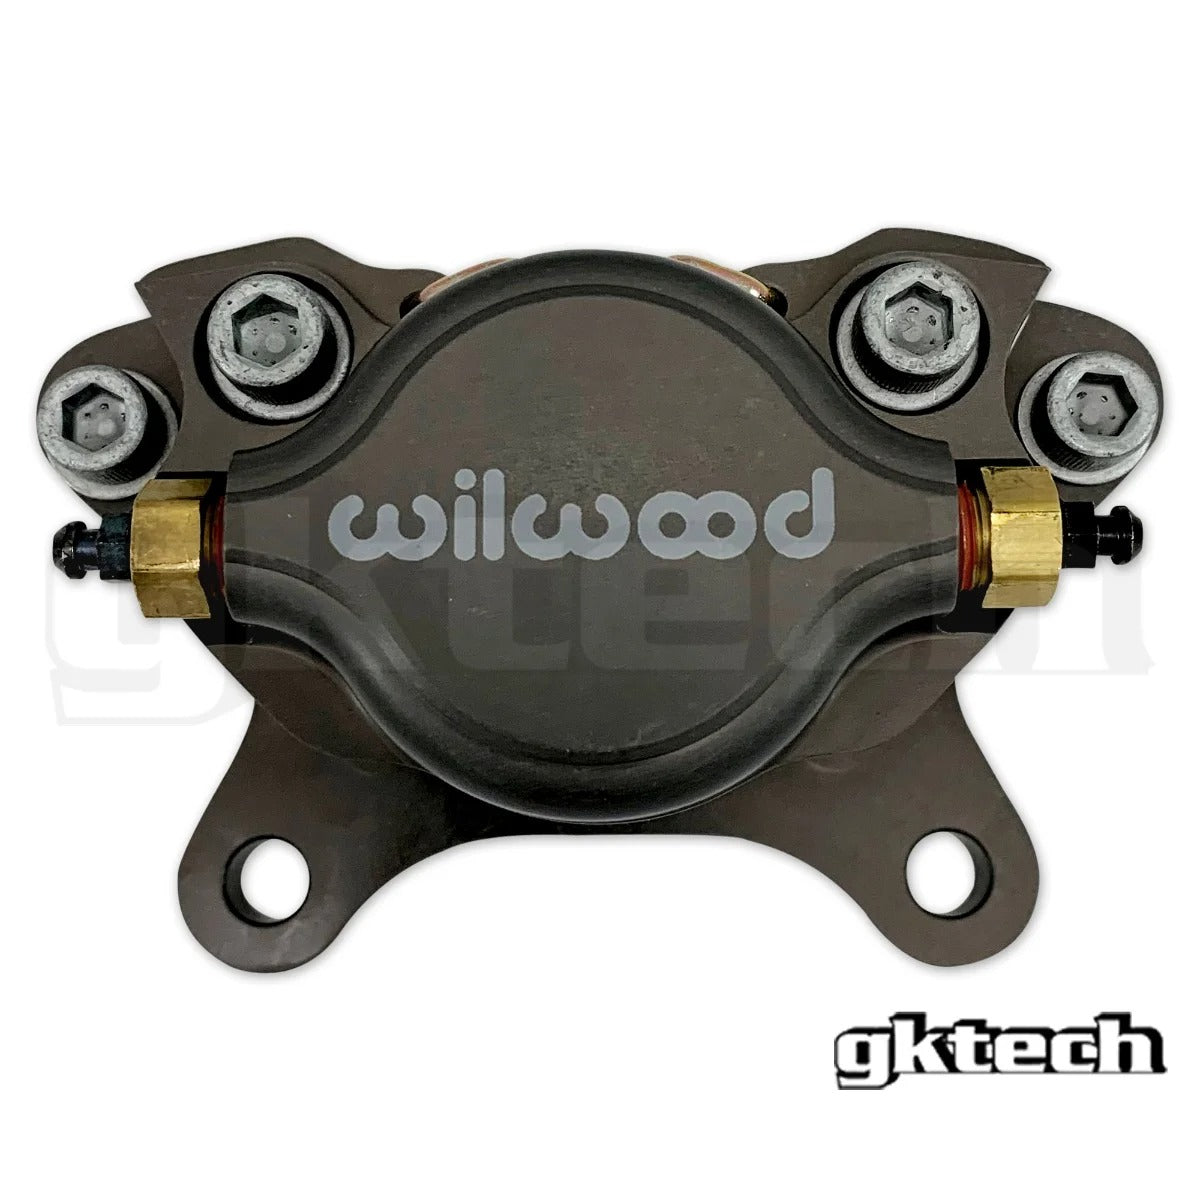 Wilwood S-chassis dual caliper Hydraulic handbrake setup - (10% combo discount)